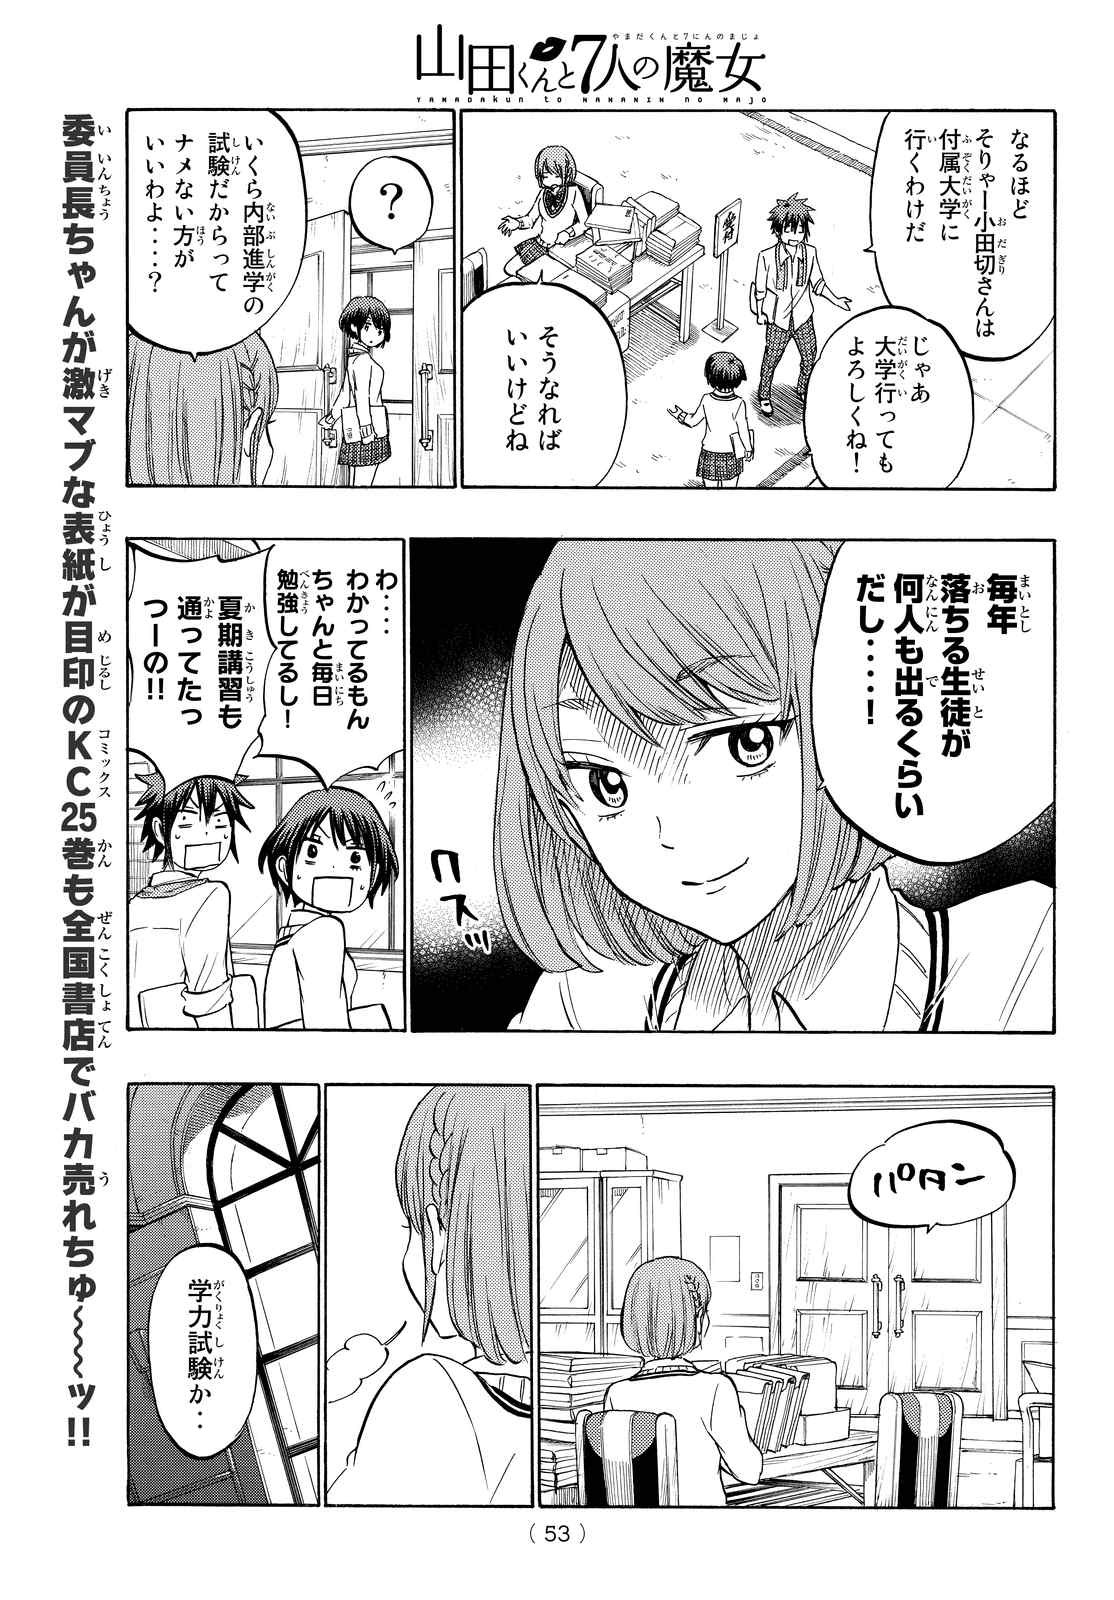 Yamada-kun to 7-nin no Majo - Chapter 233 - Page 5